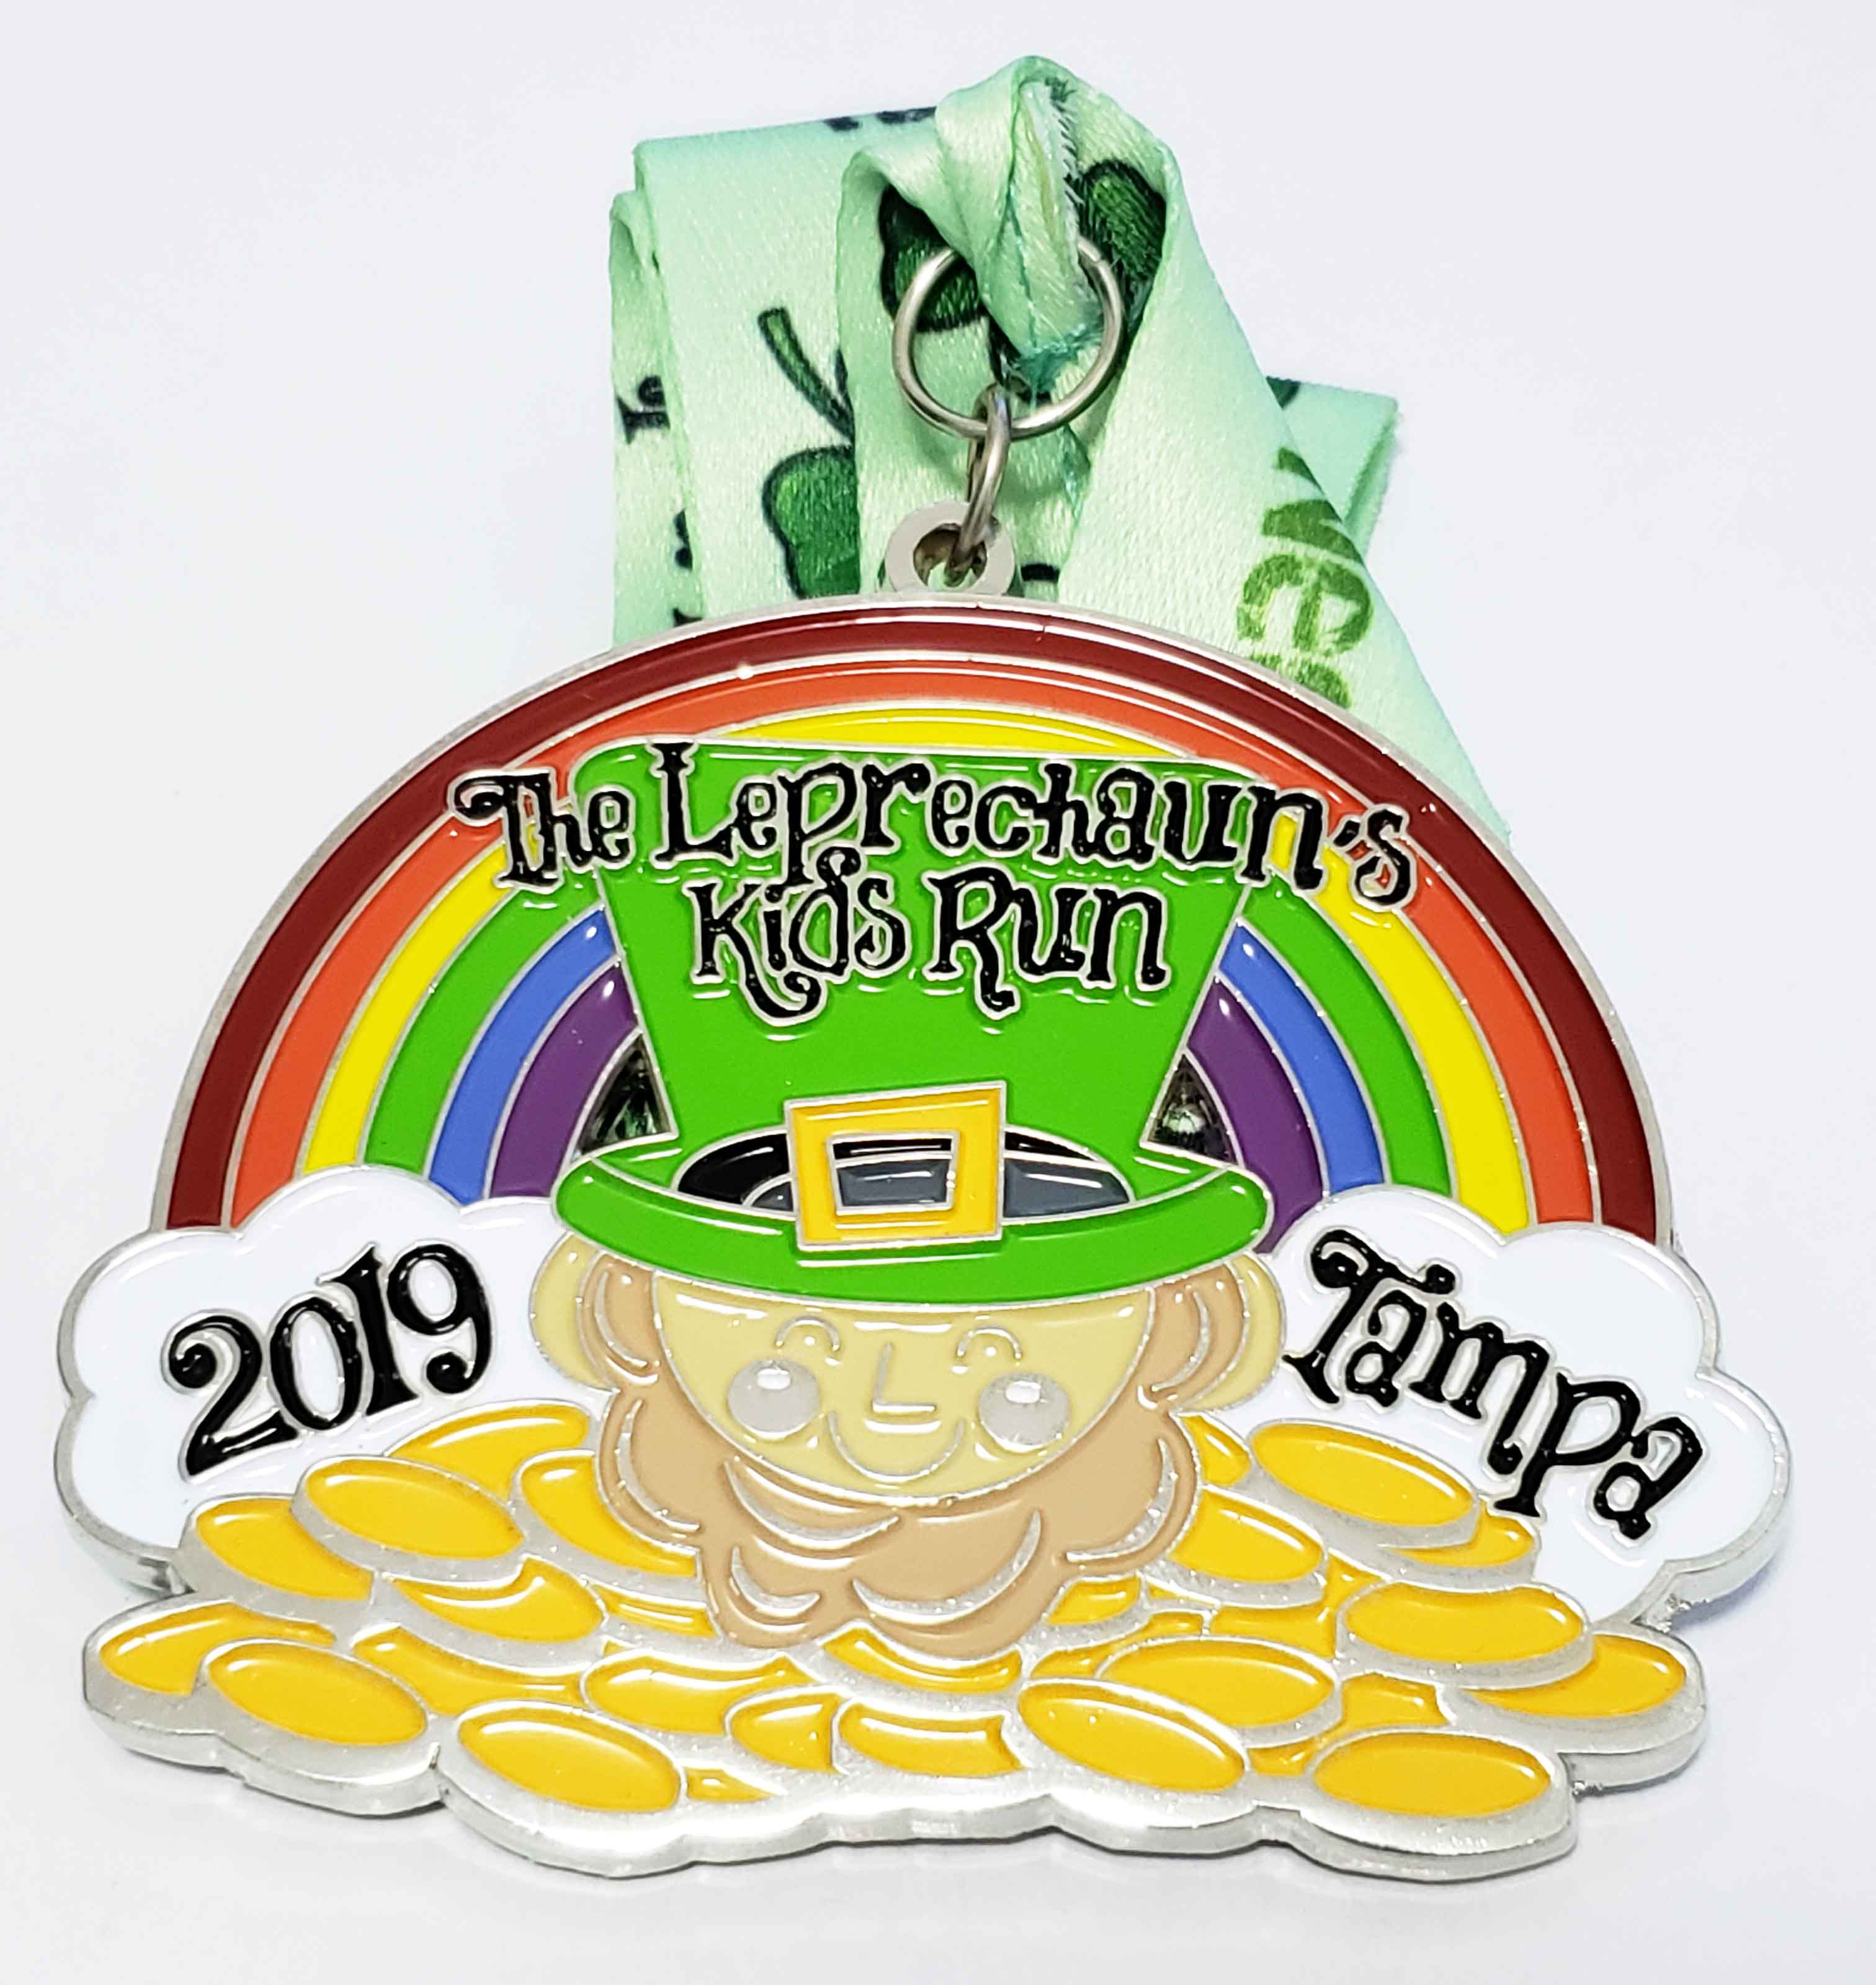 Kids run medal